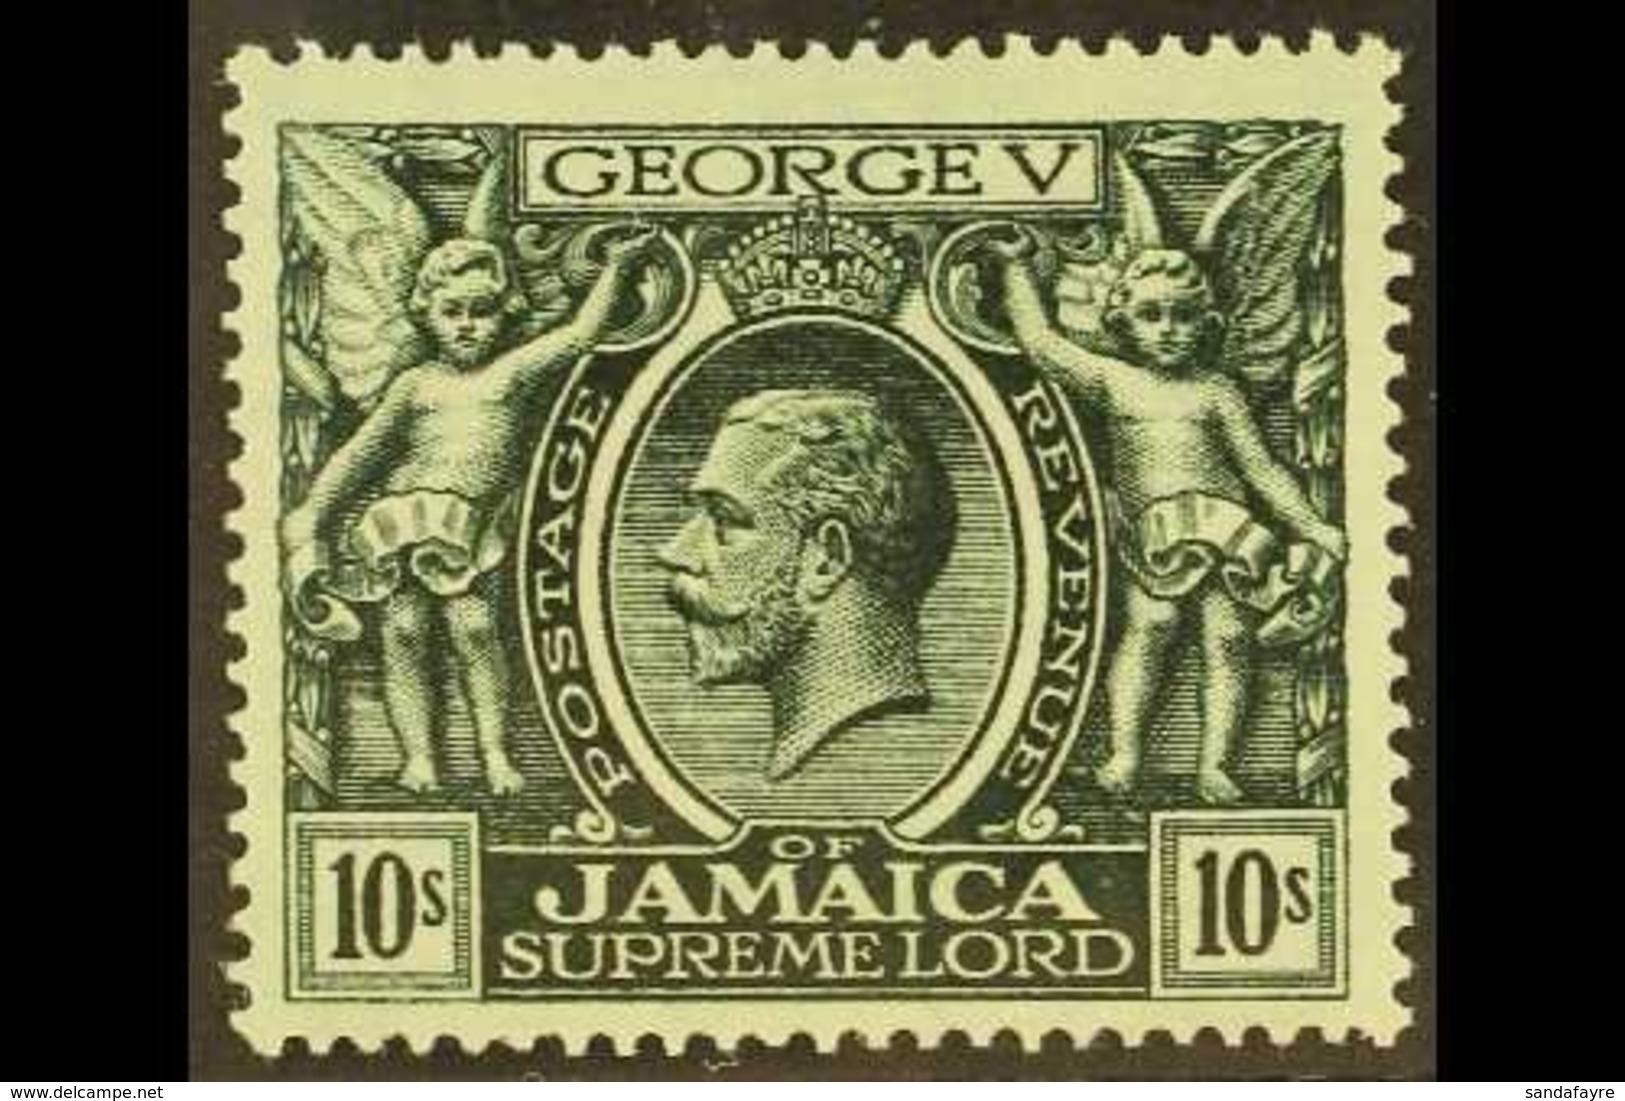 1919-21 10s Myrtle Green, SG 89, Very Lightly Hinged Mint For More Images, Please Visit Http://www.sandafayre.com/itemde - Jamaïque (...-1961)